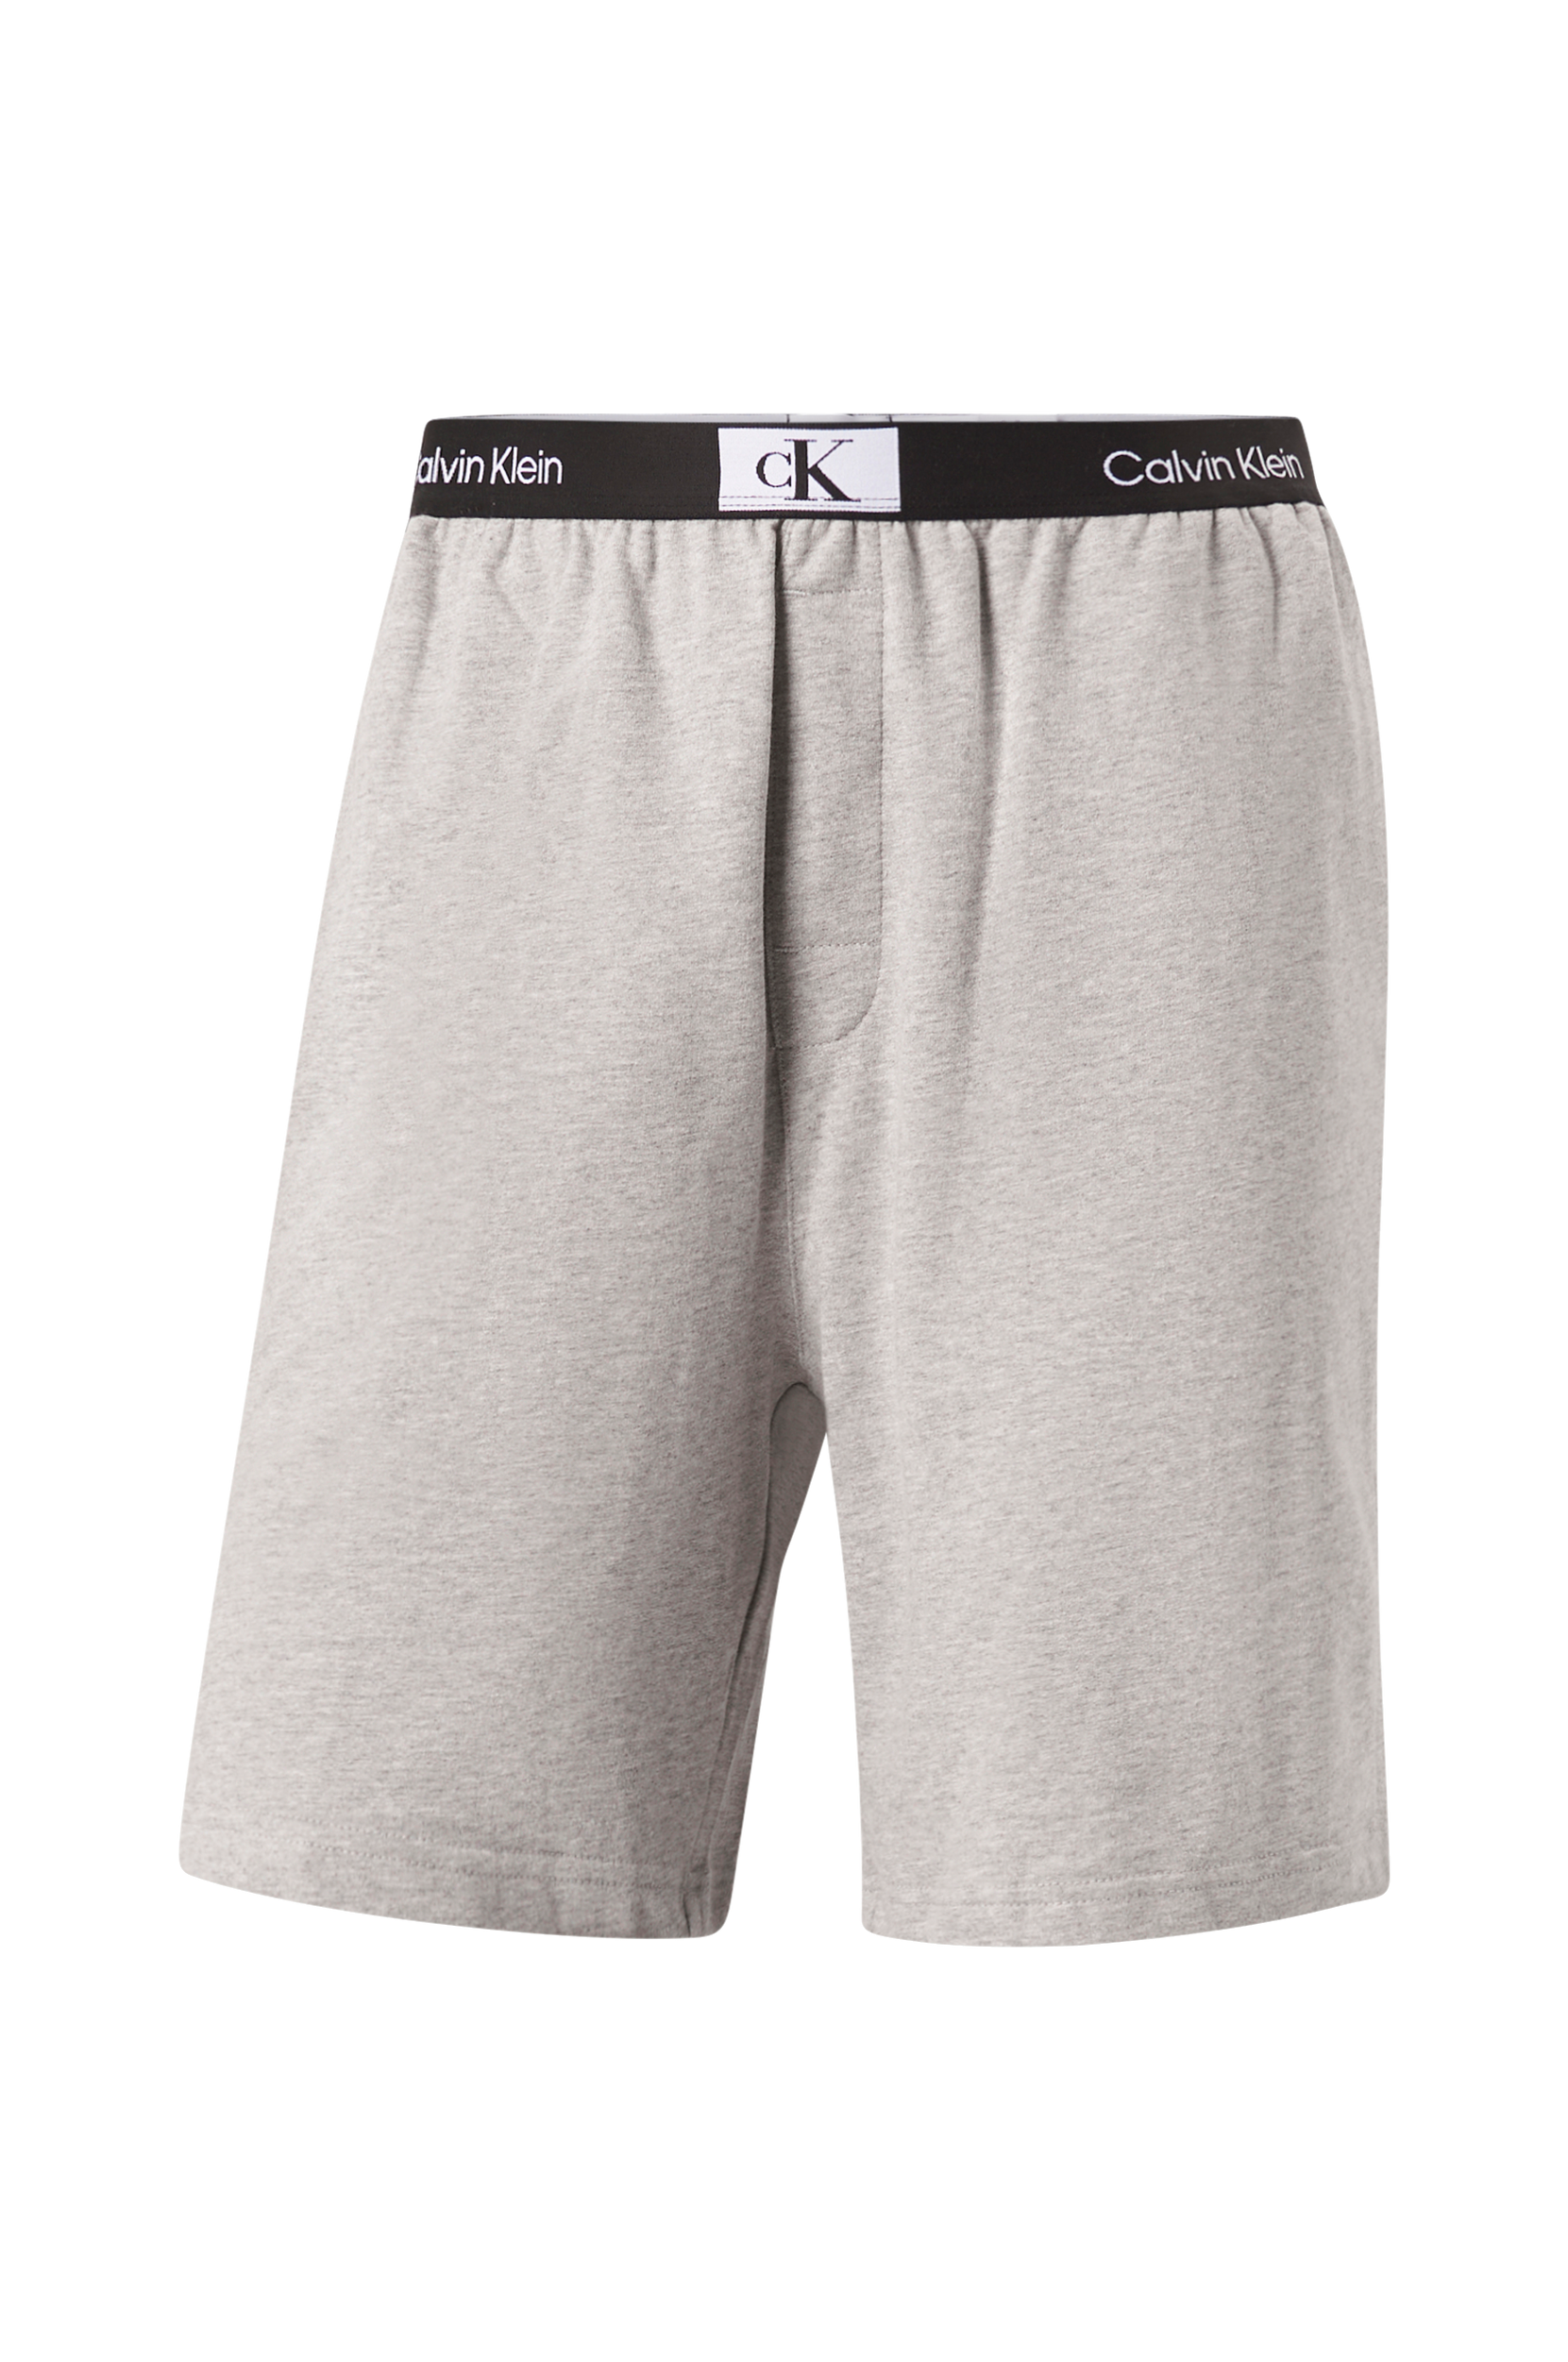 Calvin Klein - Shorts/pyjamasshorts Sleep Short - Grå - L